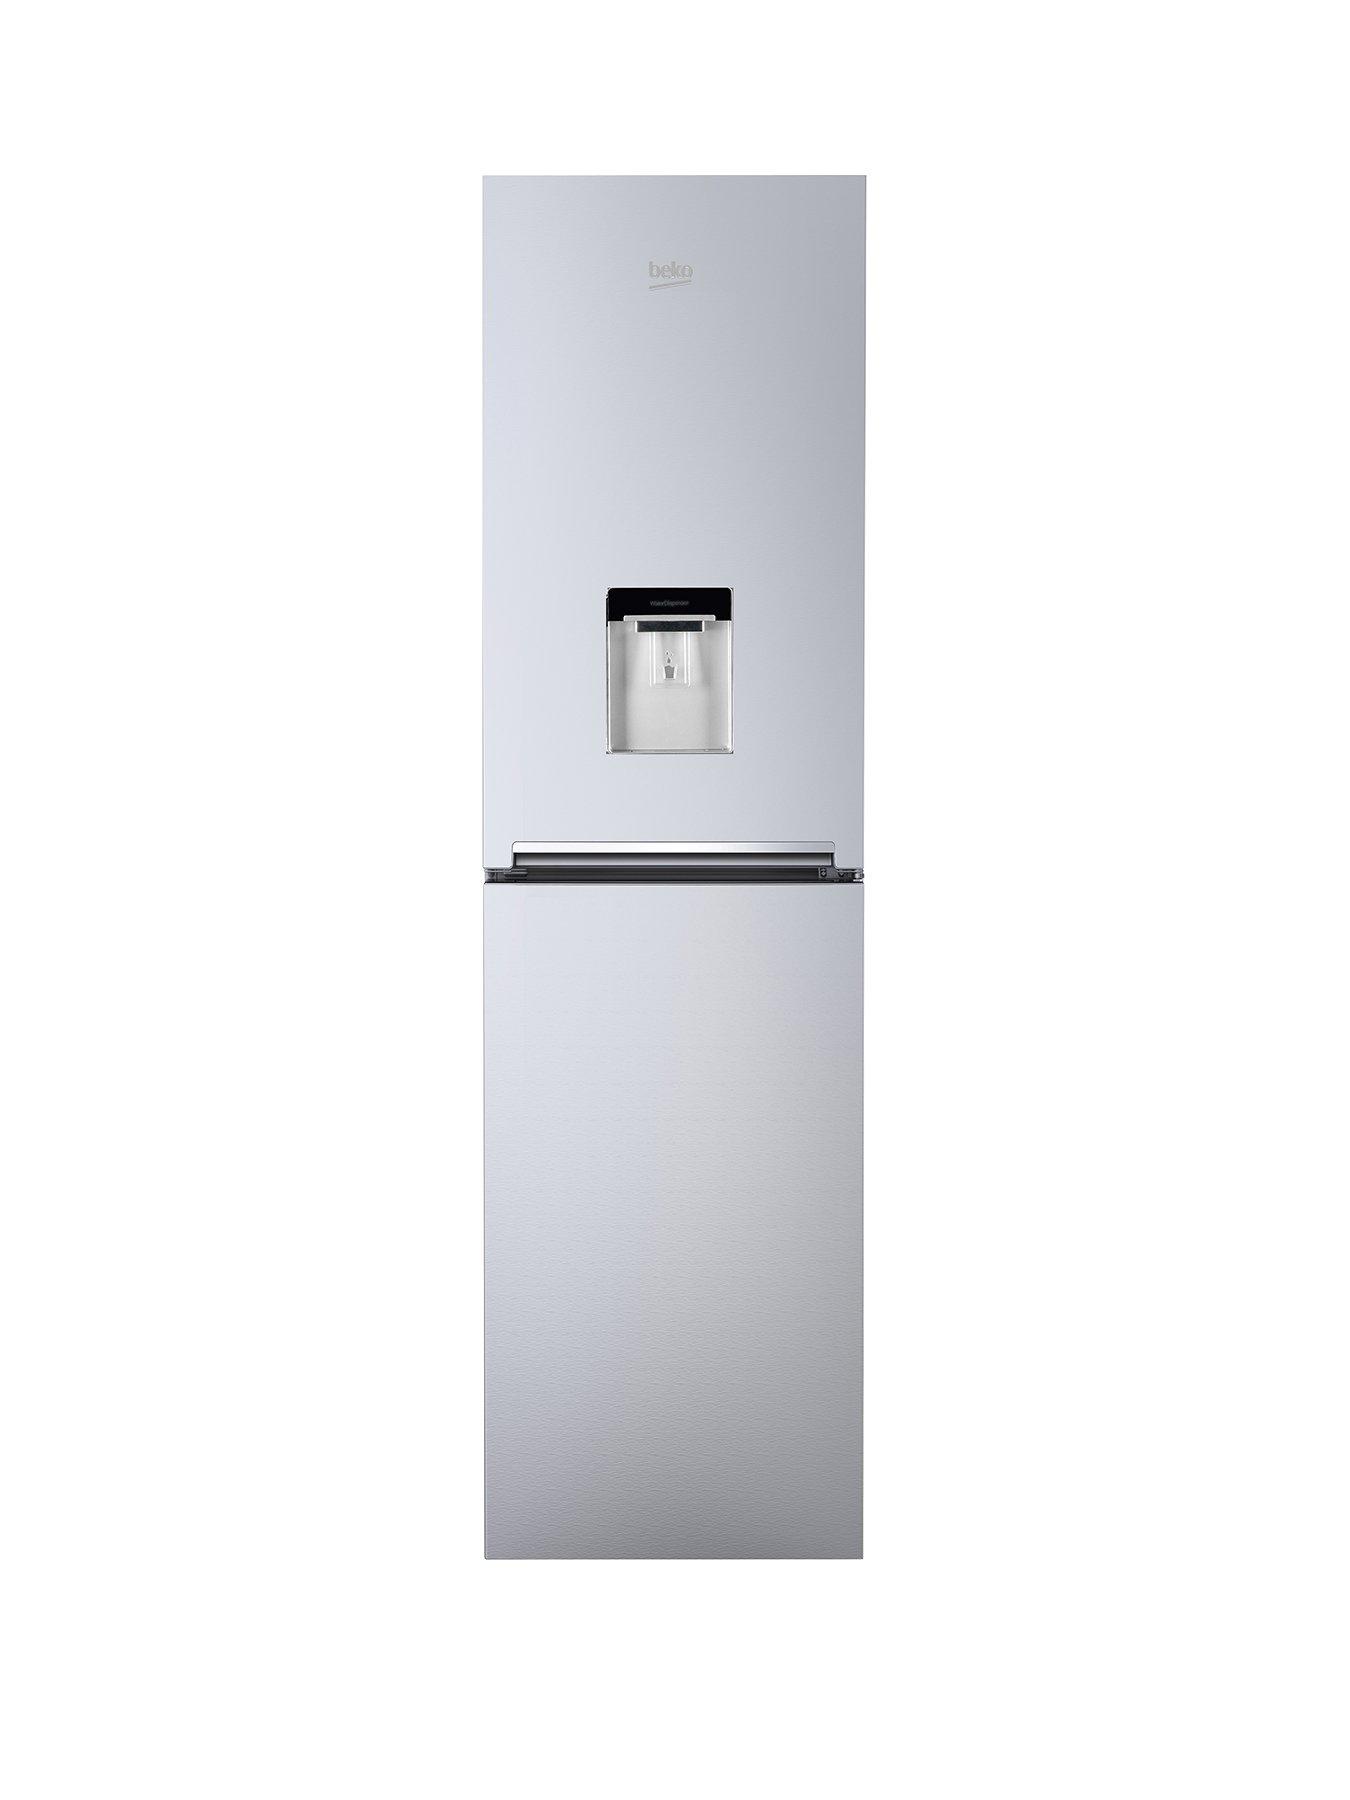 Beko Cfg1582Ds 55Cm Frost Free Fridge Freezer With Water Dispenser – Silver